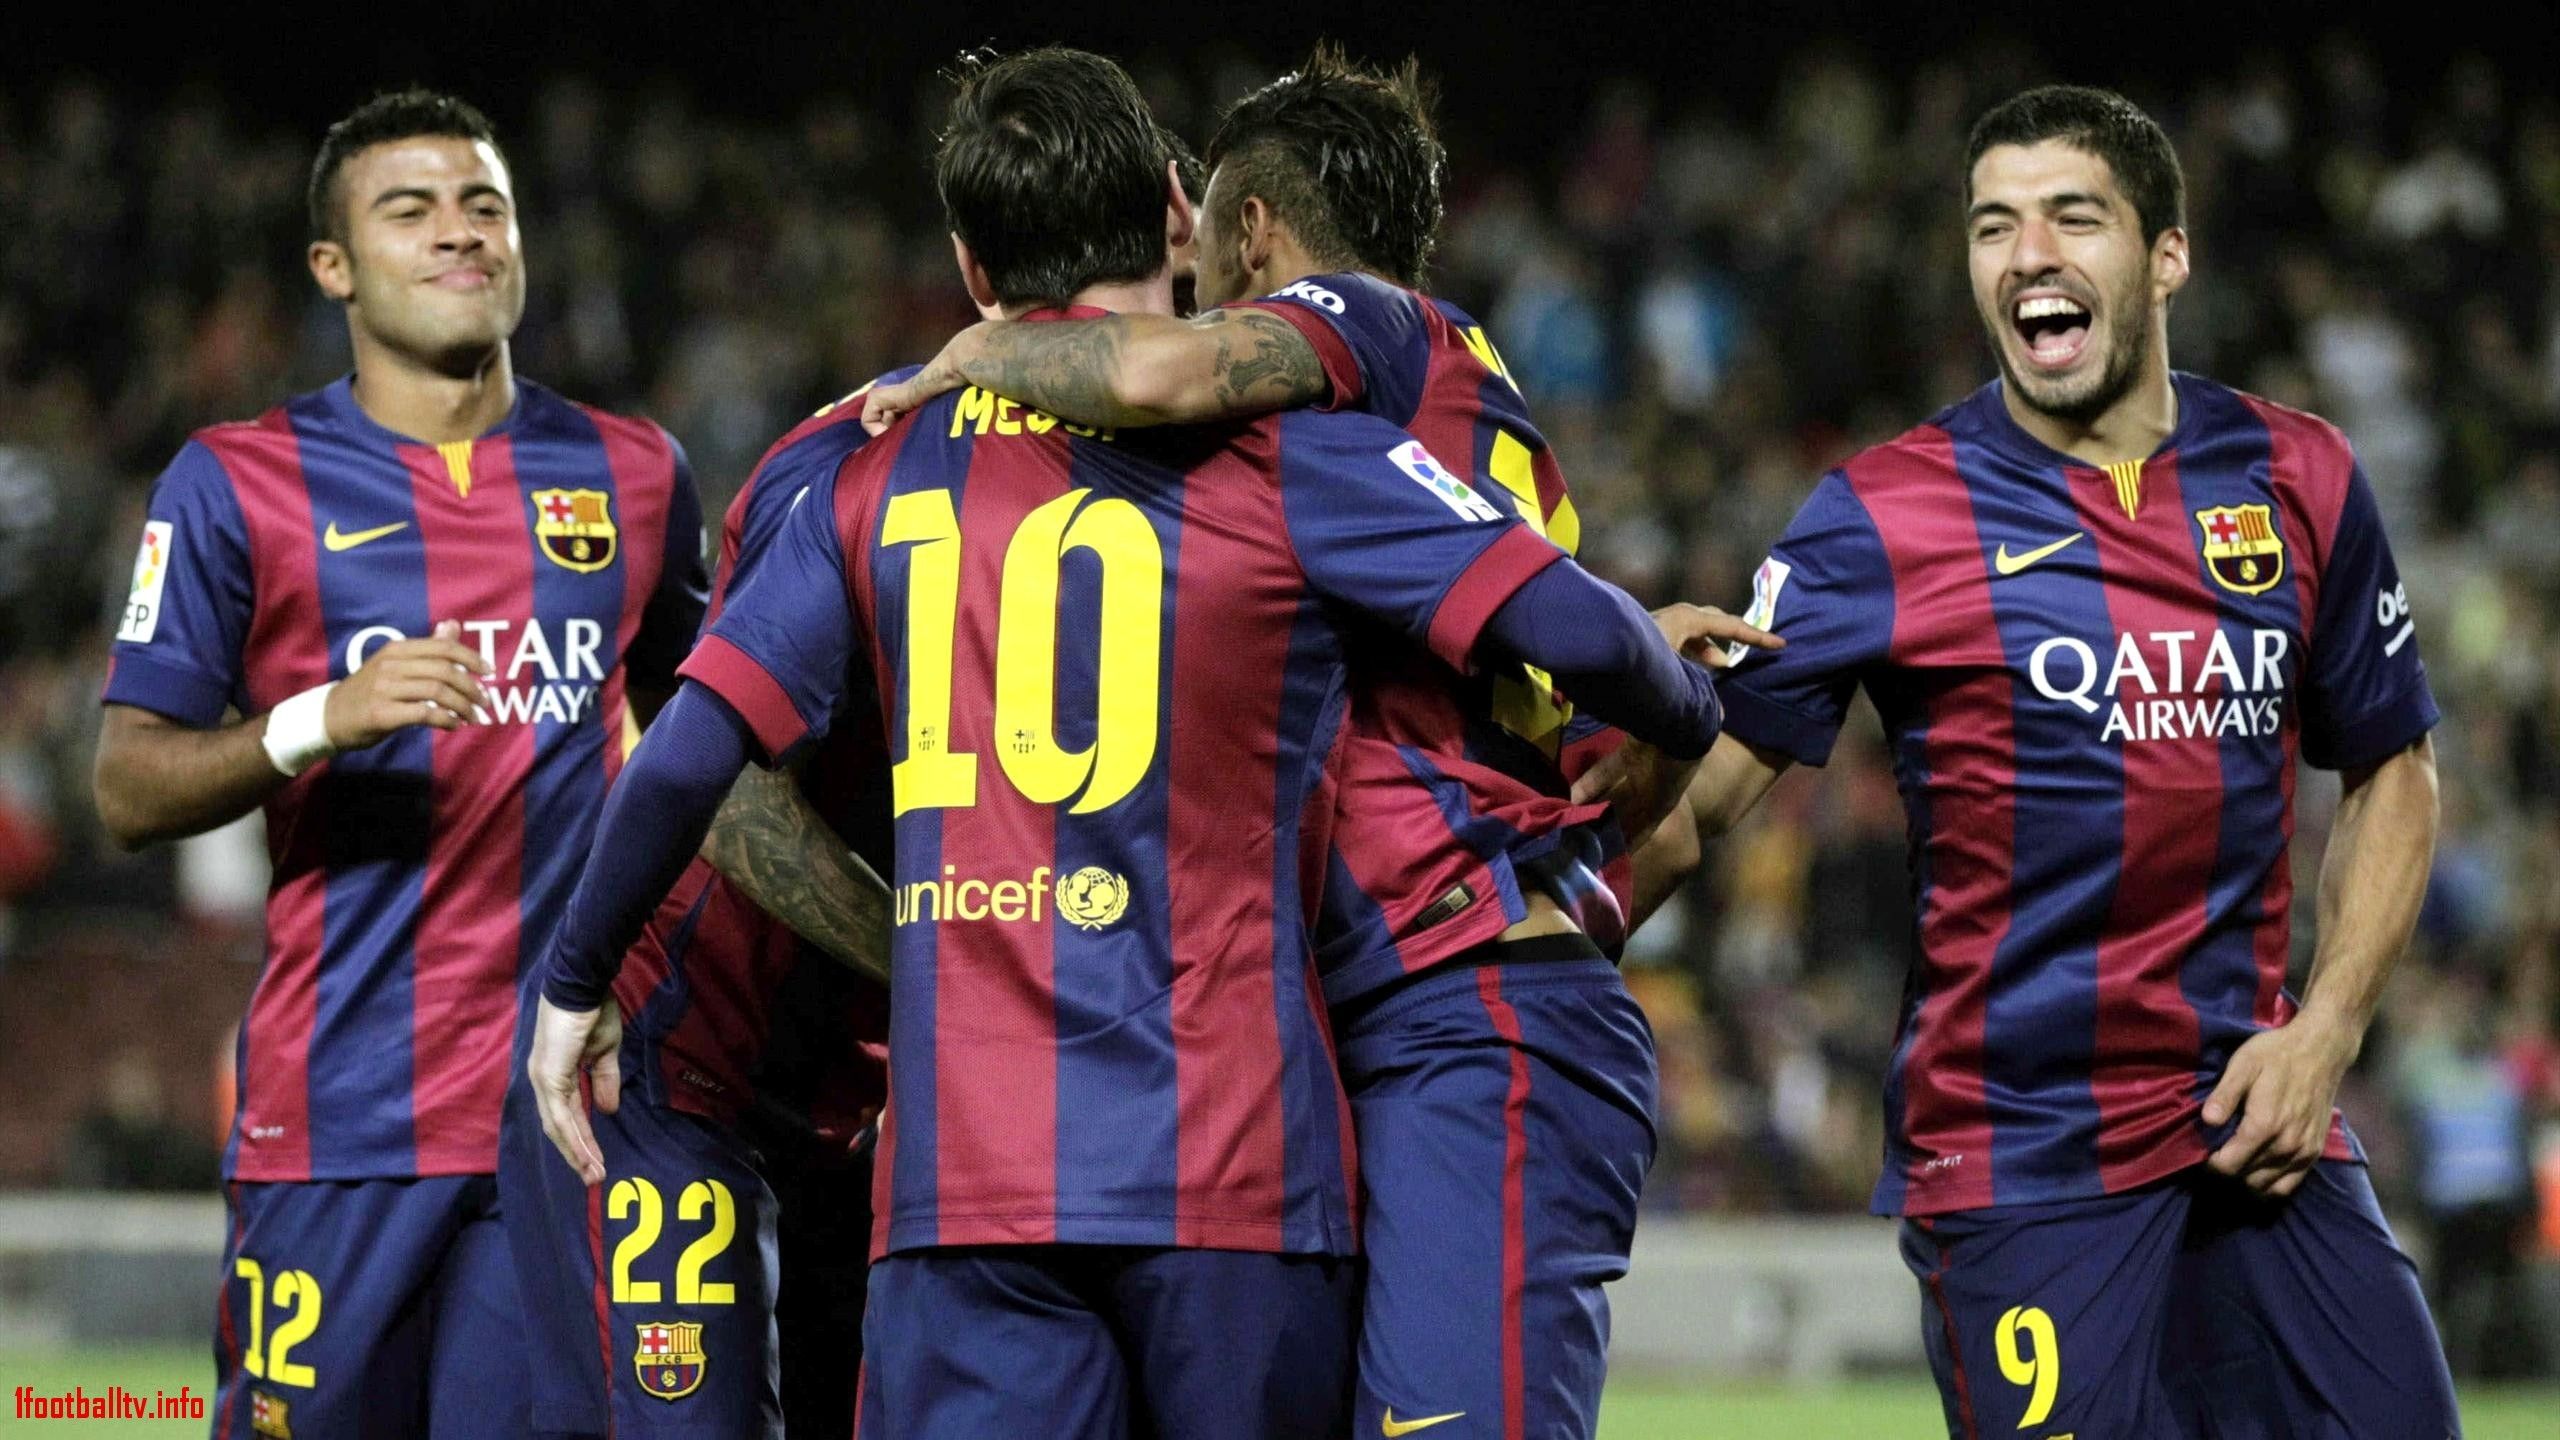 Messi Suarez Neymar Wallpaper background picture